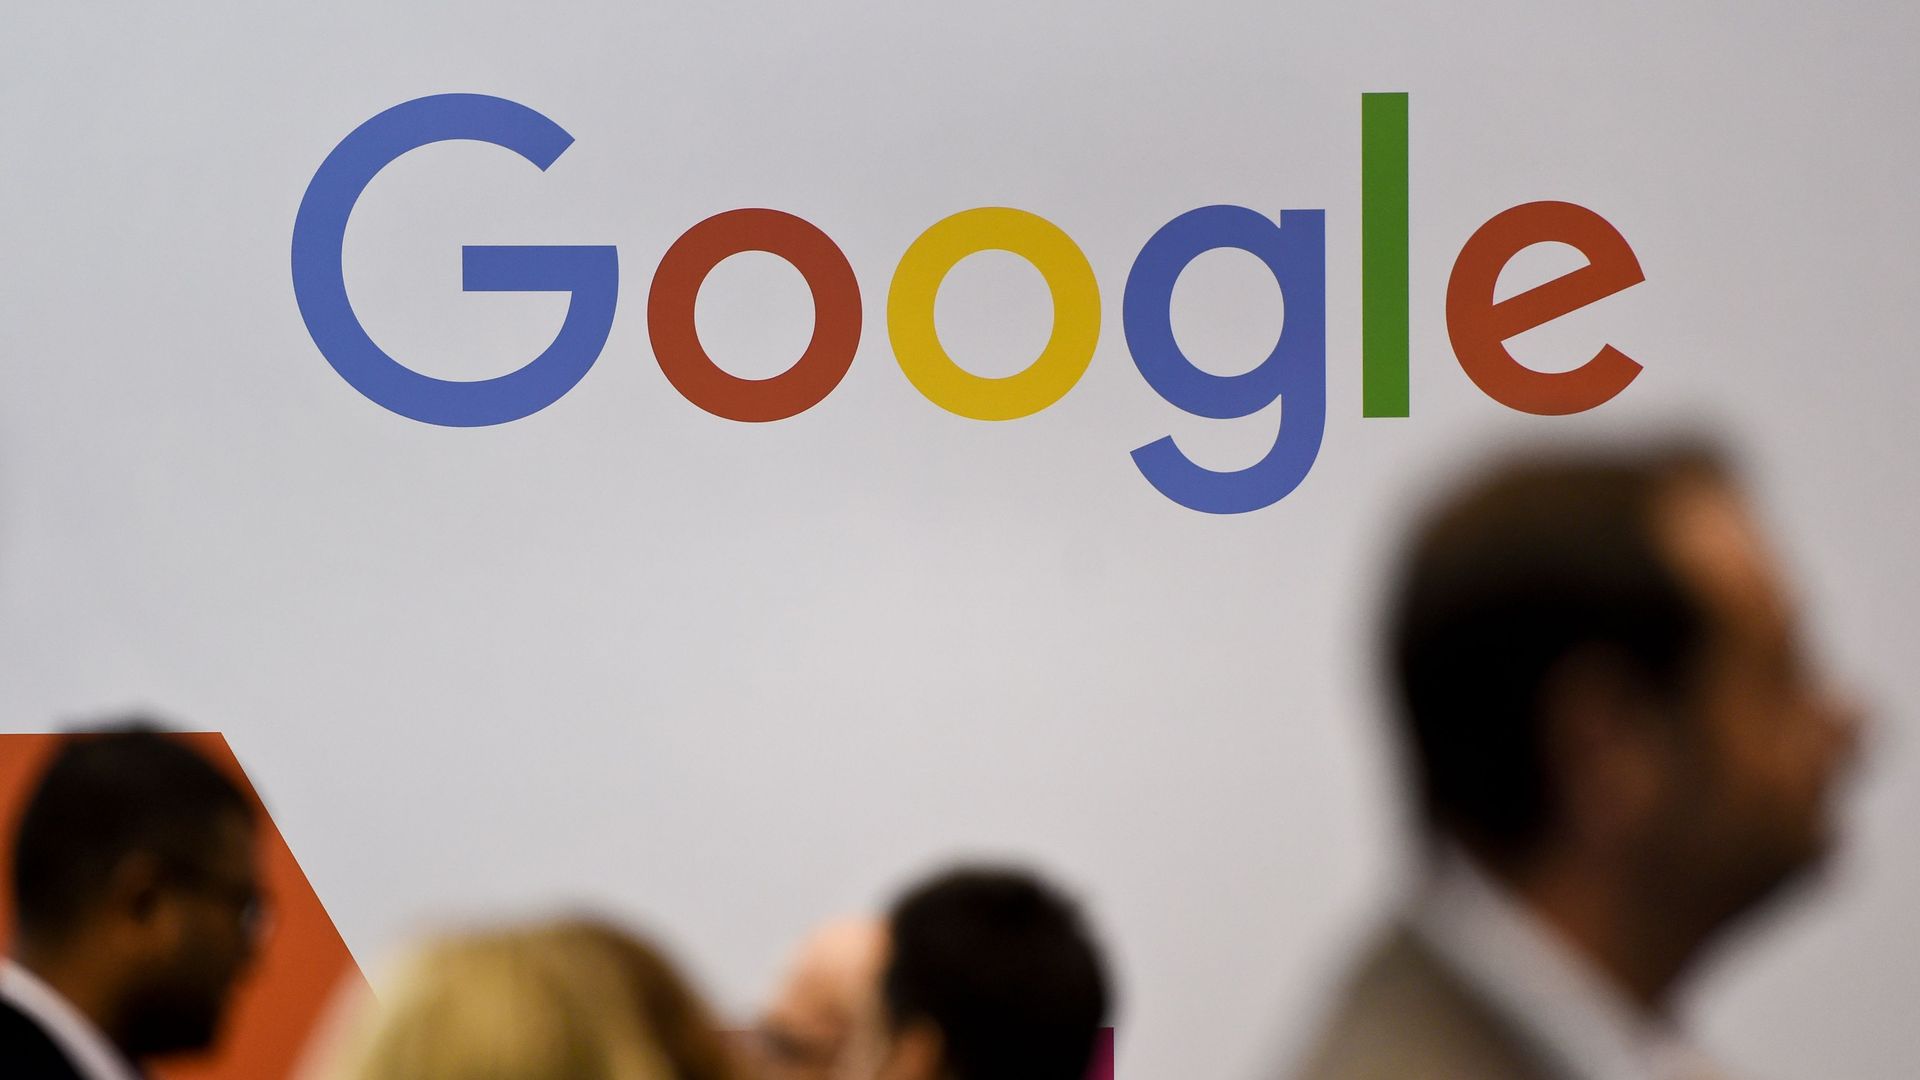 People walk past a Google logo on a wall in Lisbon